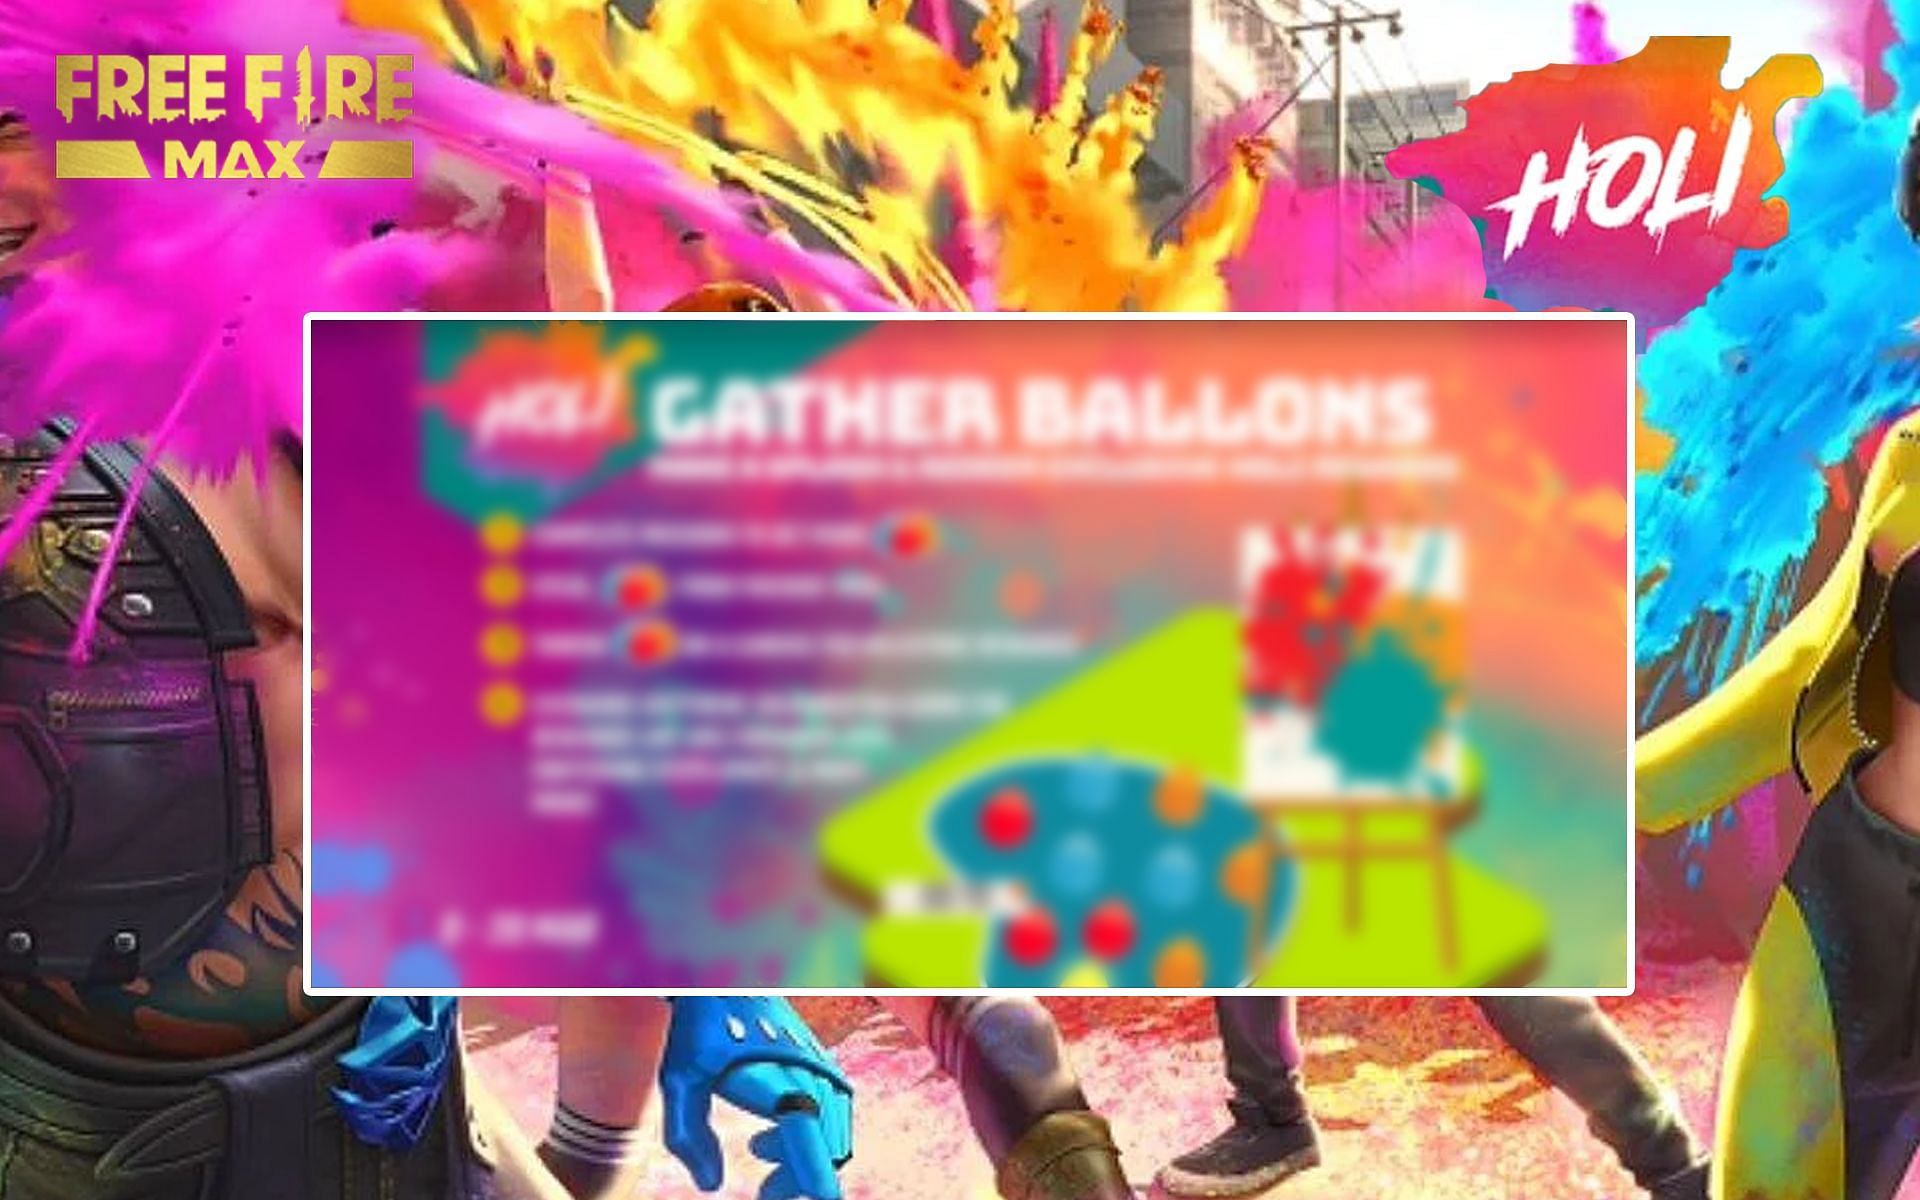 Gather Balloons, Make a Splash event in Free Fire MAX (Image via Sportskeeda)